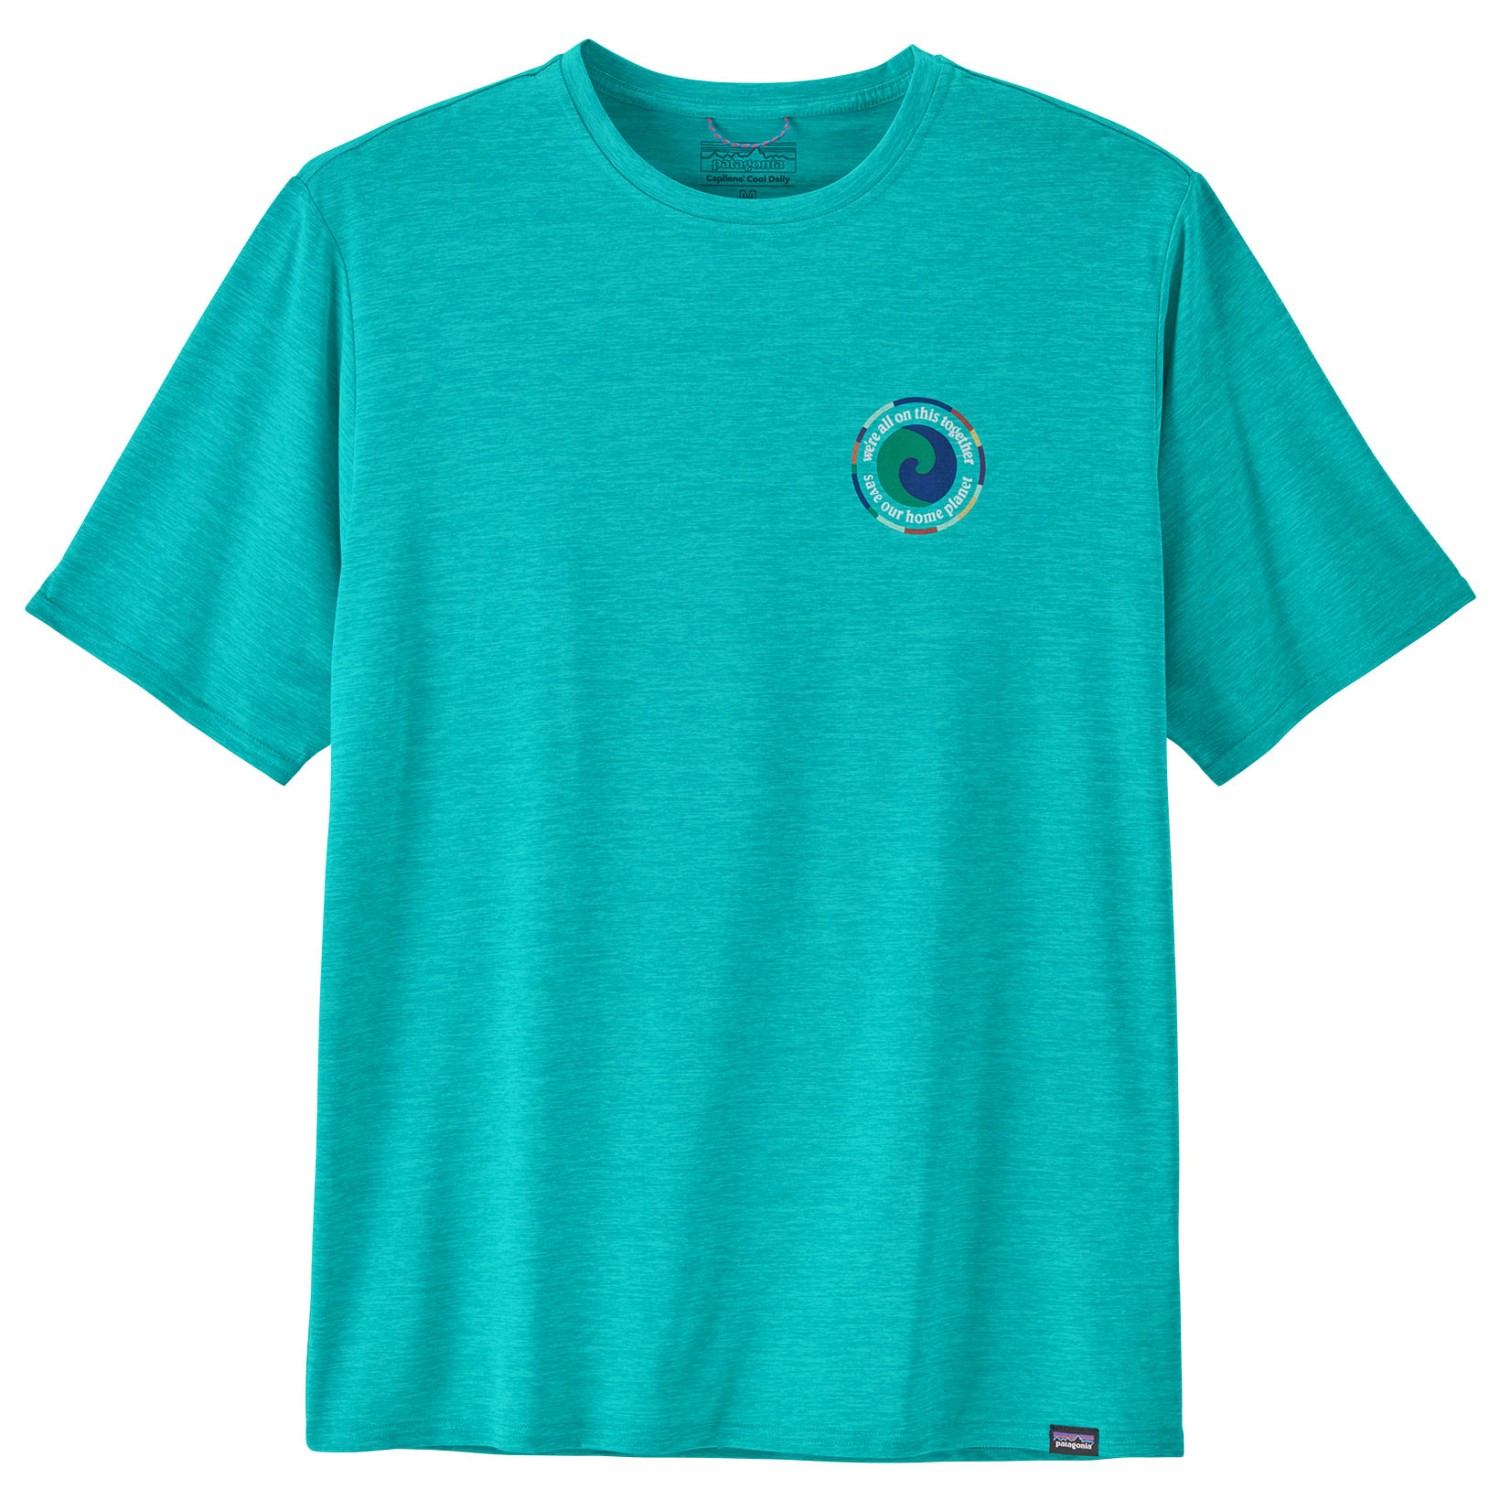 Функциональная рубашка Patagonia Cap Cool Daily Graphic Shirt, цвет Unity Fitz/Subtidal Blue X Dye функциональная рубашка patagonia l s cap cool daily graphic shirt waters цвет fitz roy trout subtidal blue x dye